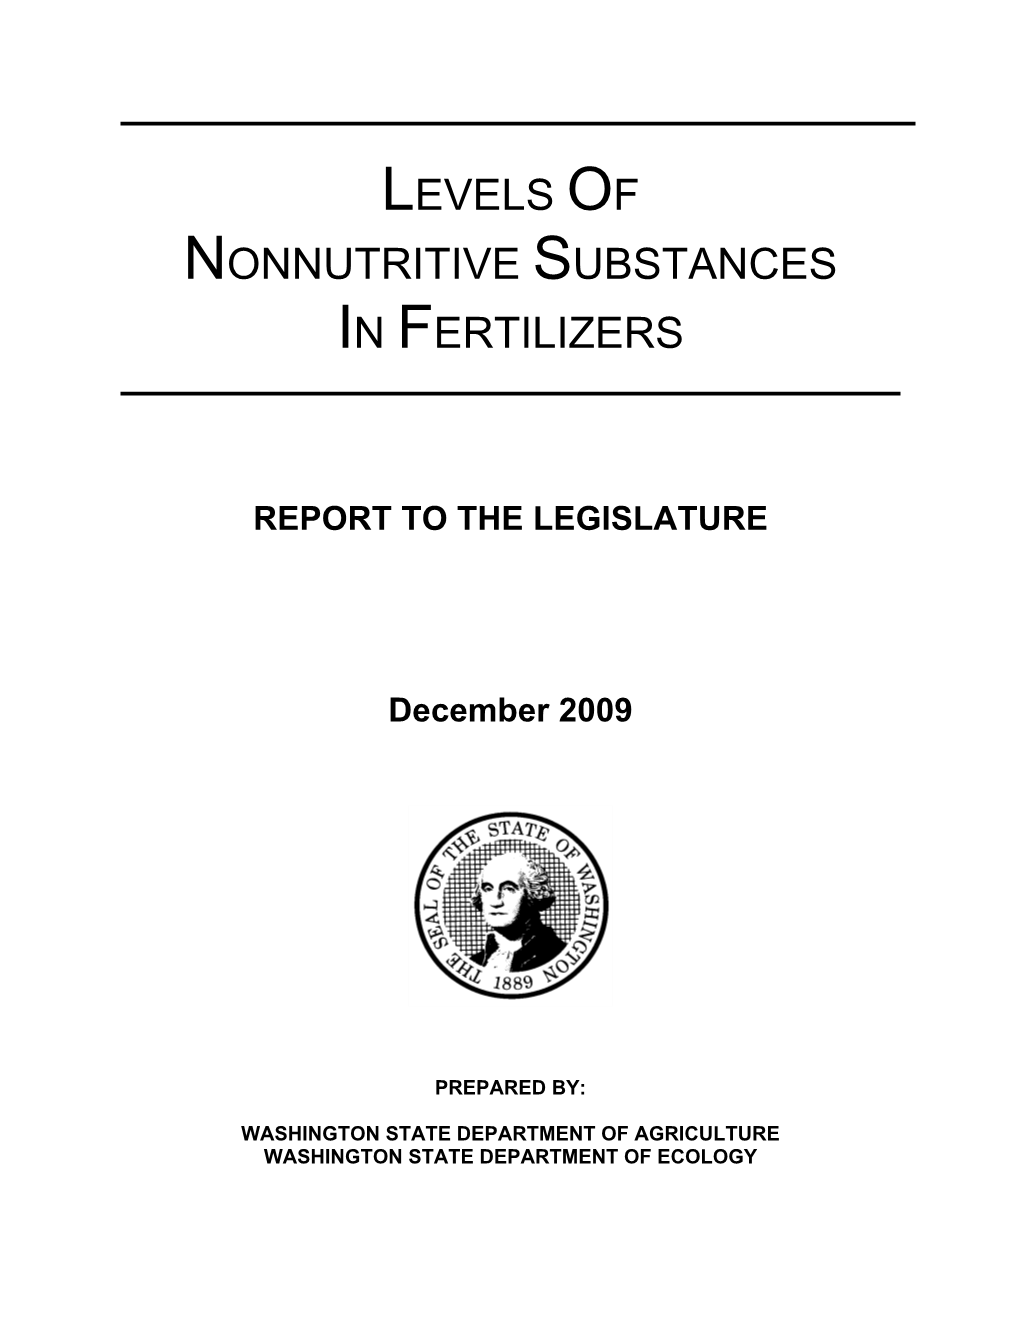 Levels of Non-Nutritive Substances in Fertilizers